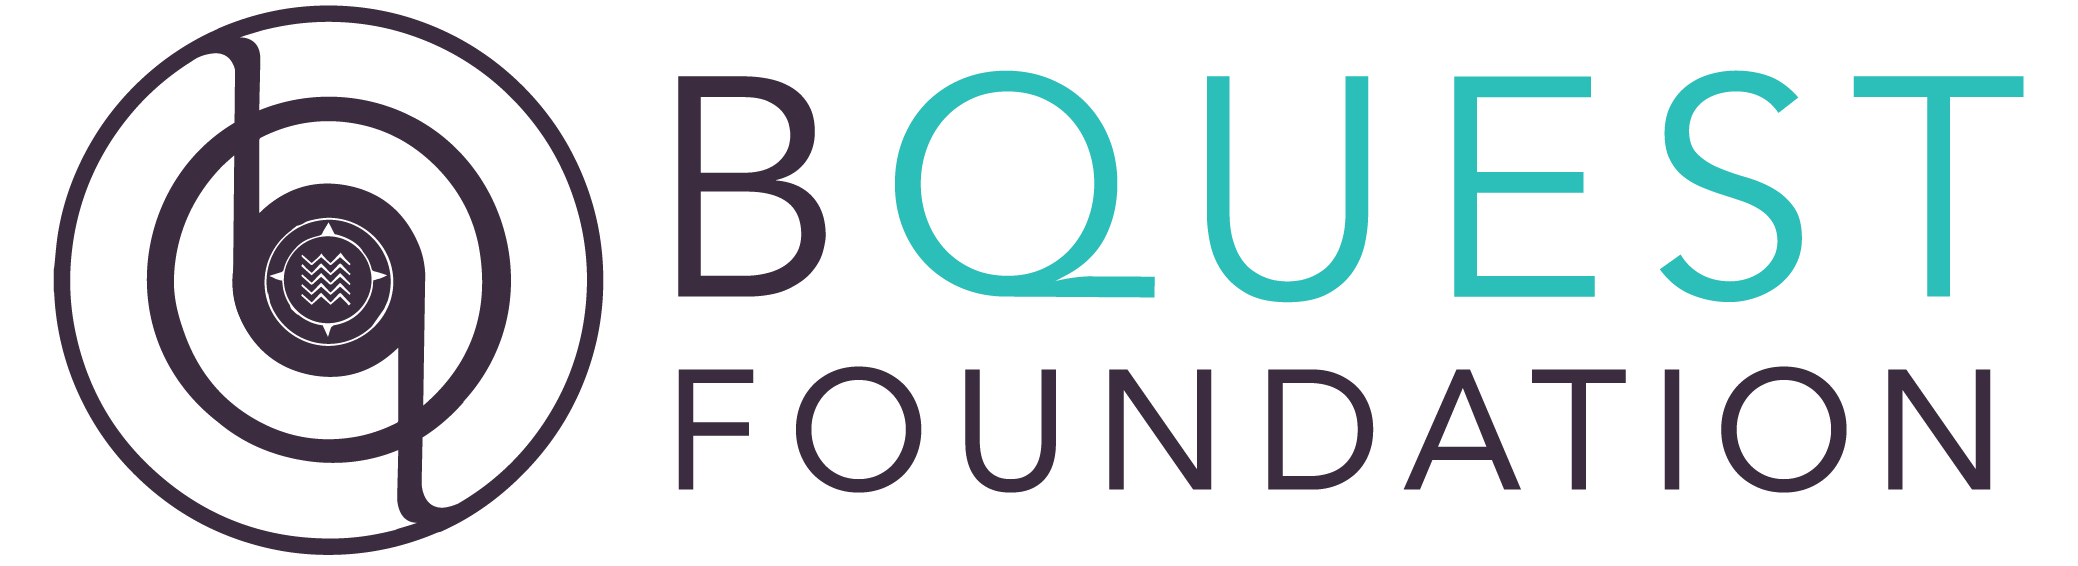 BQuest Foundation